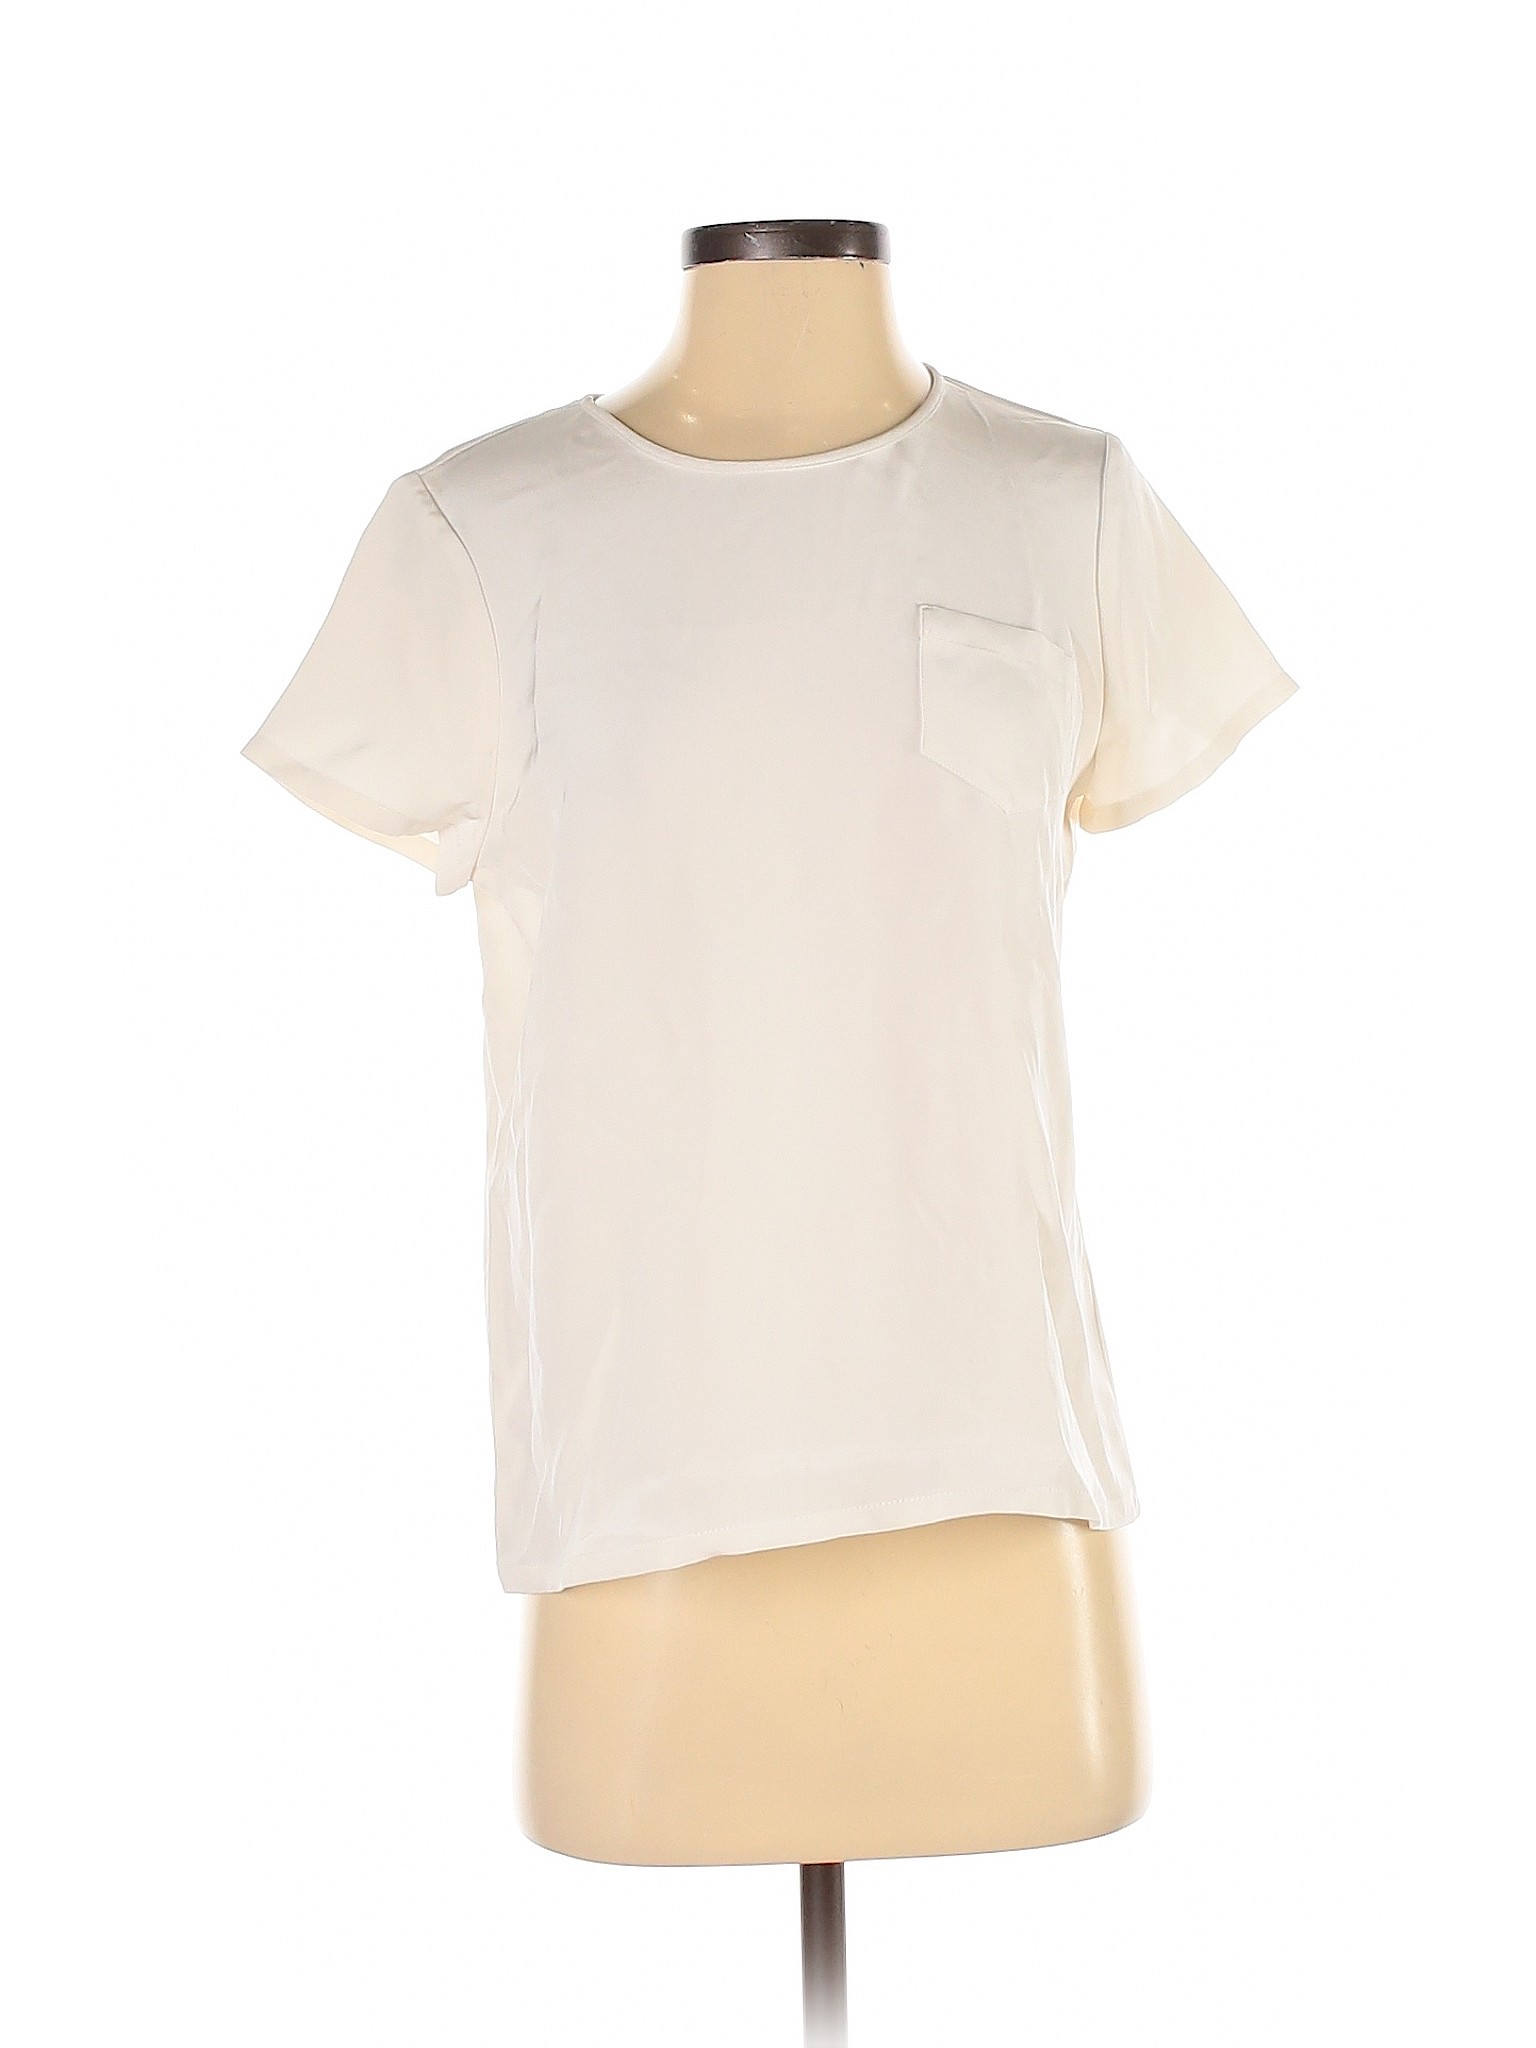 NWT Assorted Brands Women Ivory Short Sleeve Blouse 4 | eBay